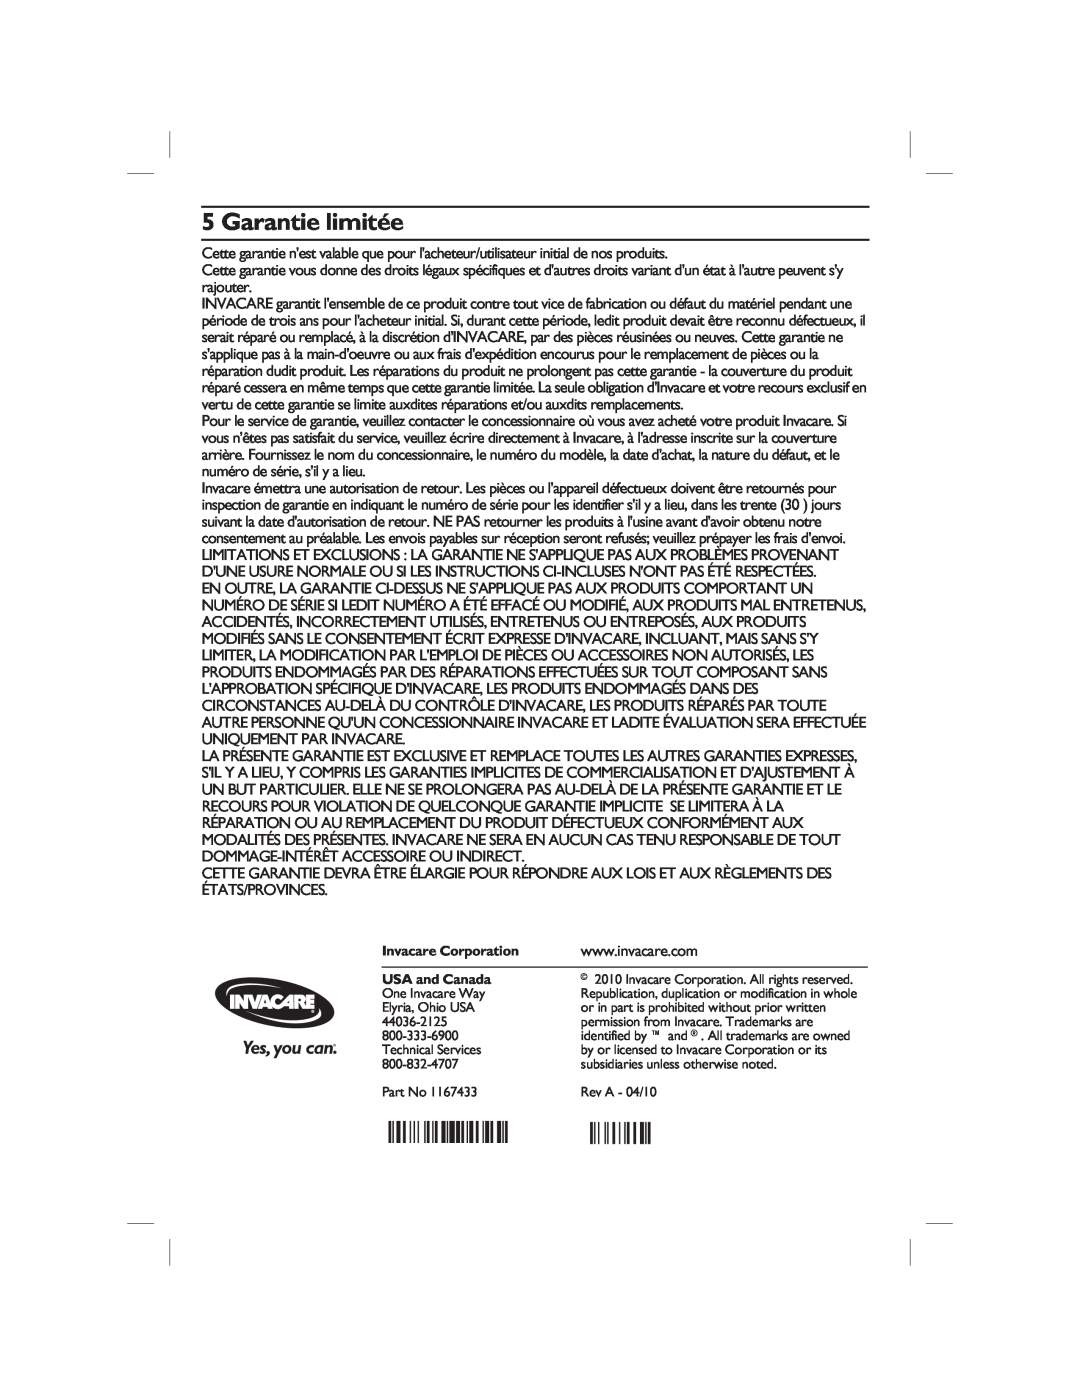 Invacare 1300RTS, 1301RTS, 1302RTS user manual Garantie limitée, Invacare Corporation, USA and Canada 